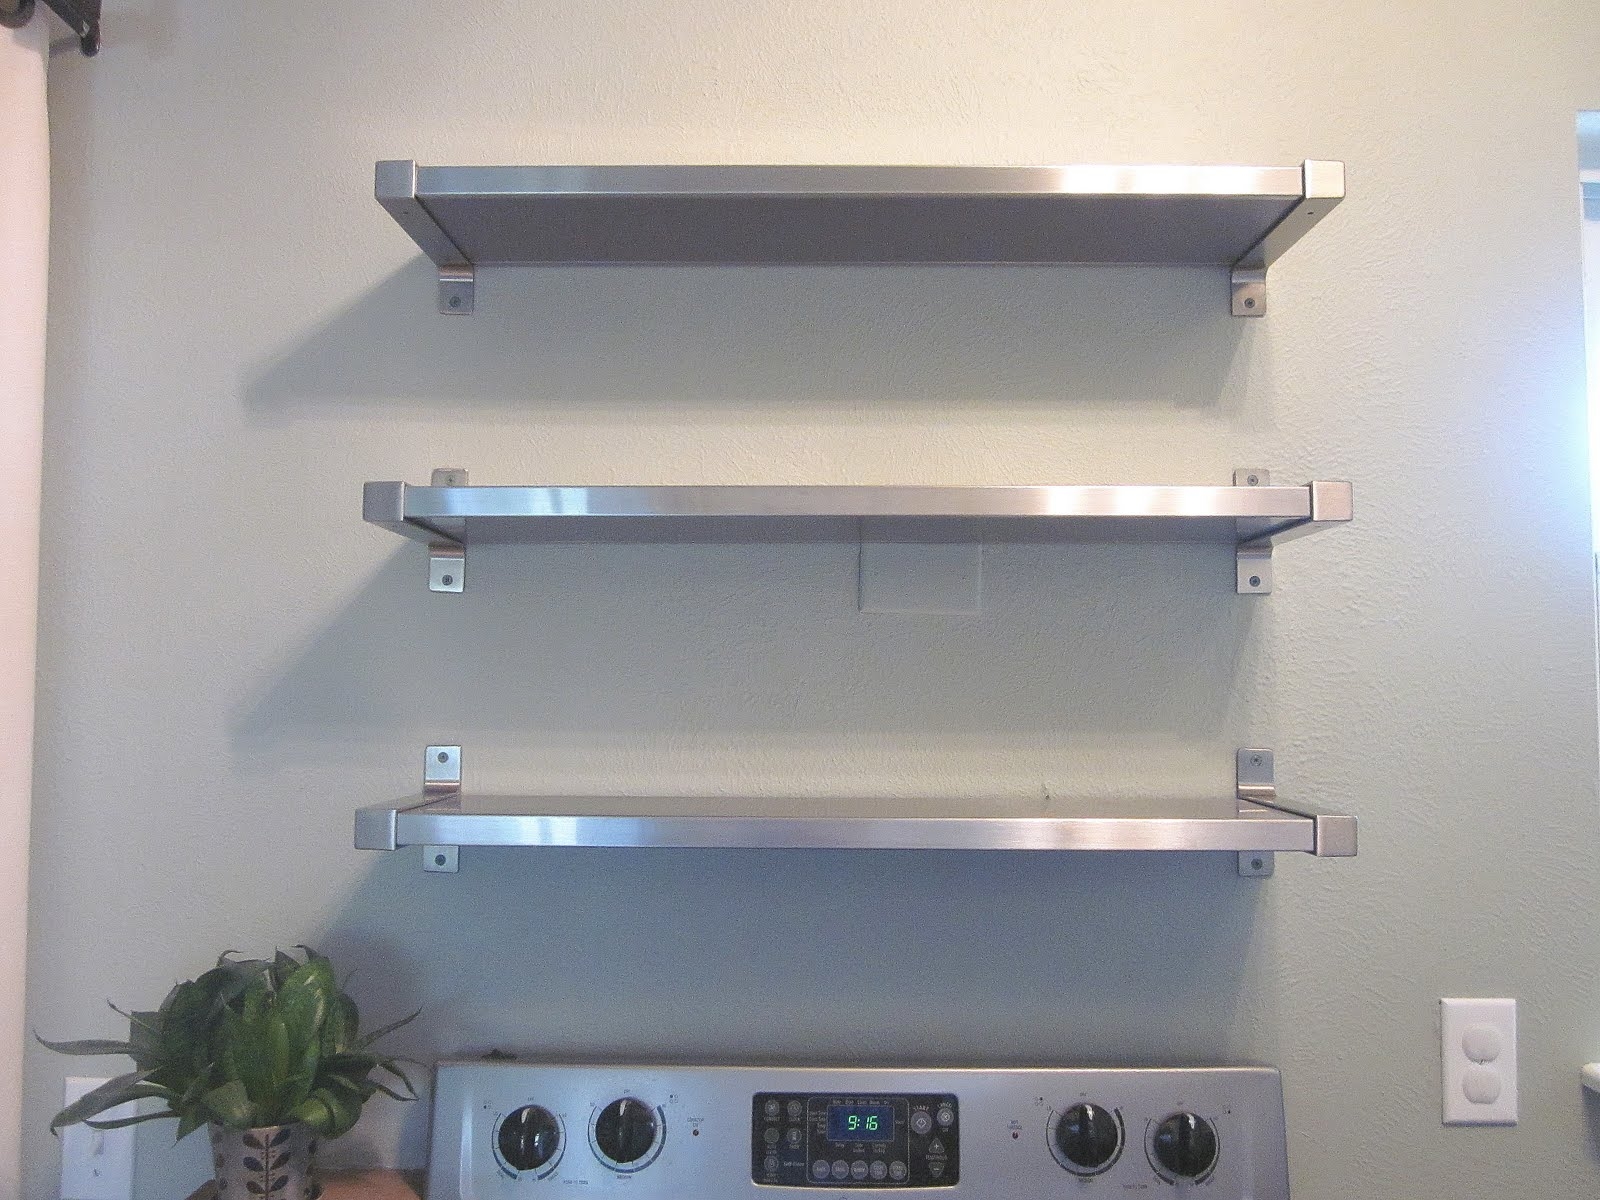 Floating stainless steel kitchen shelves